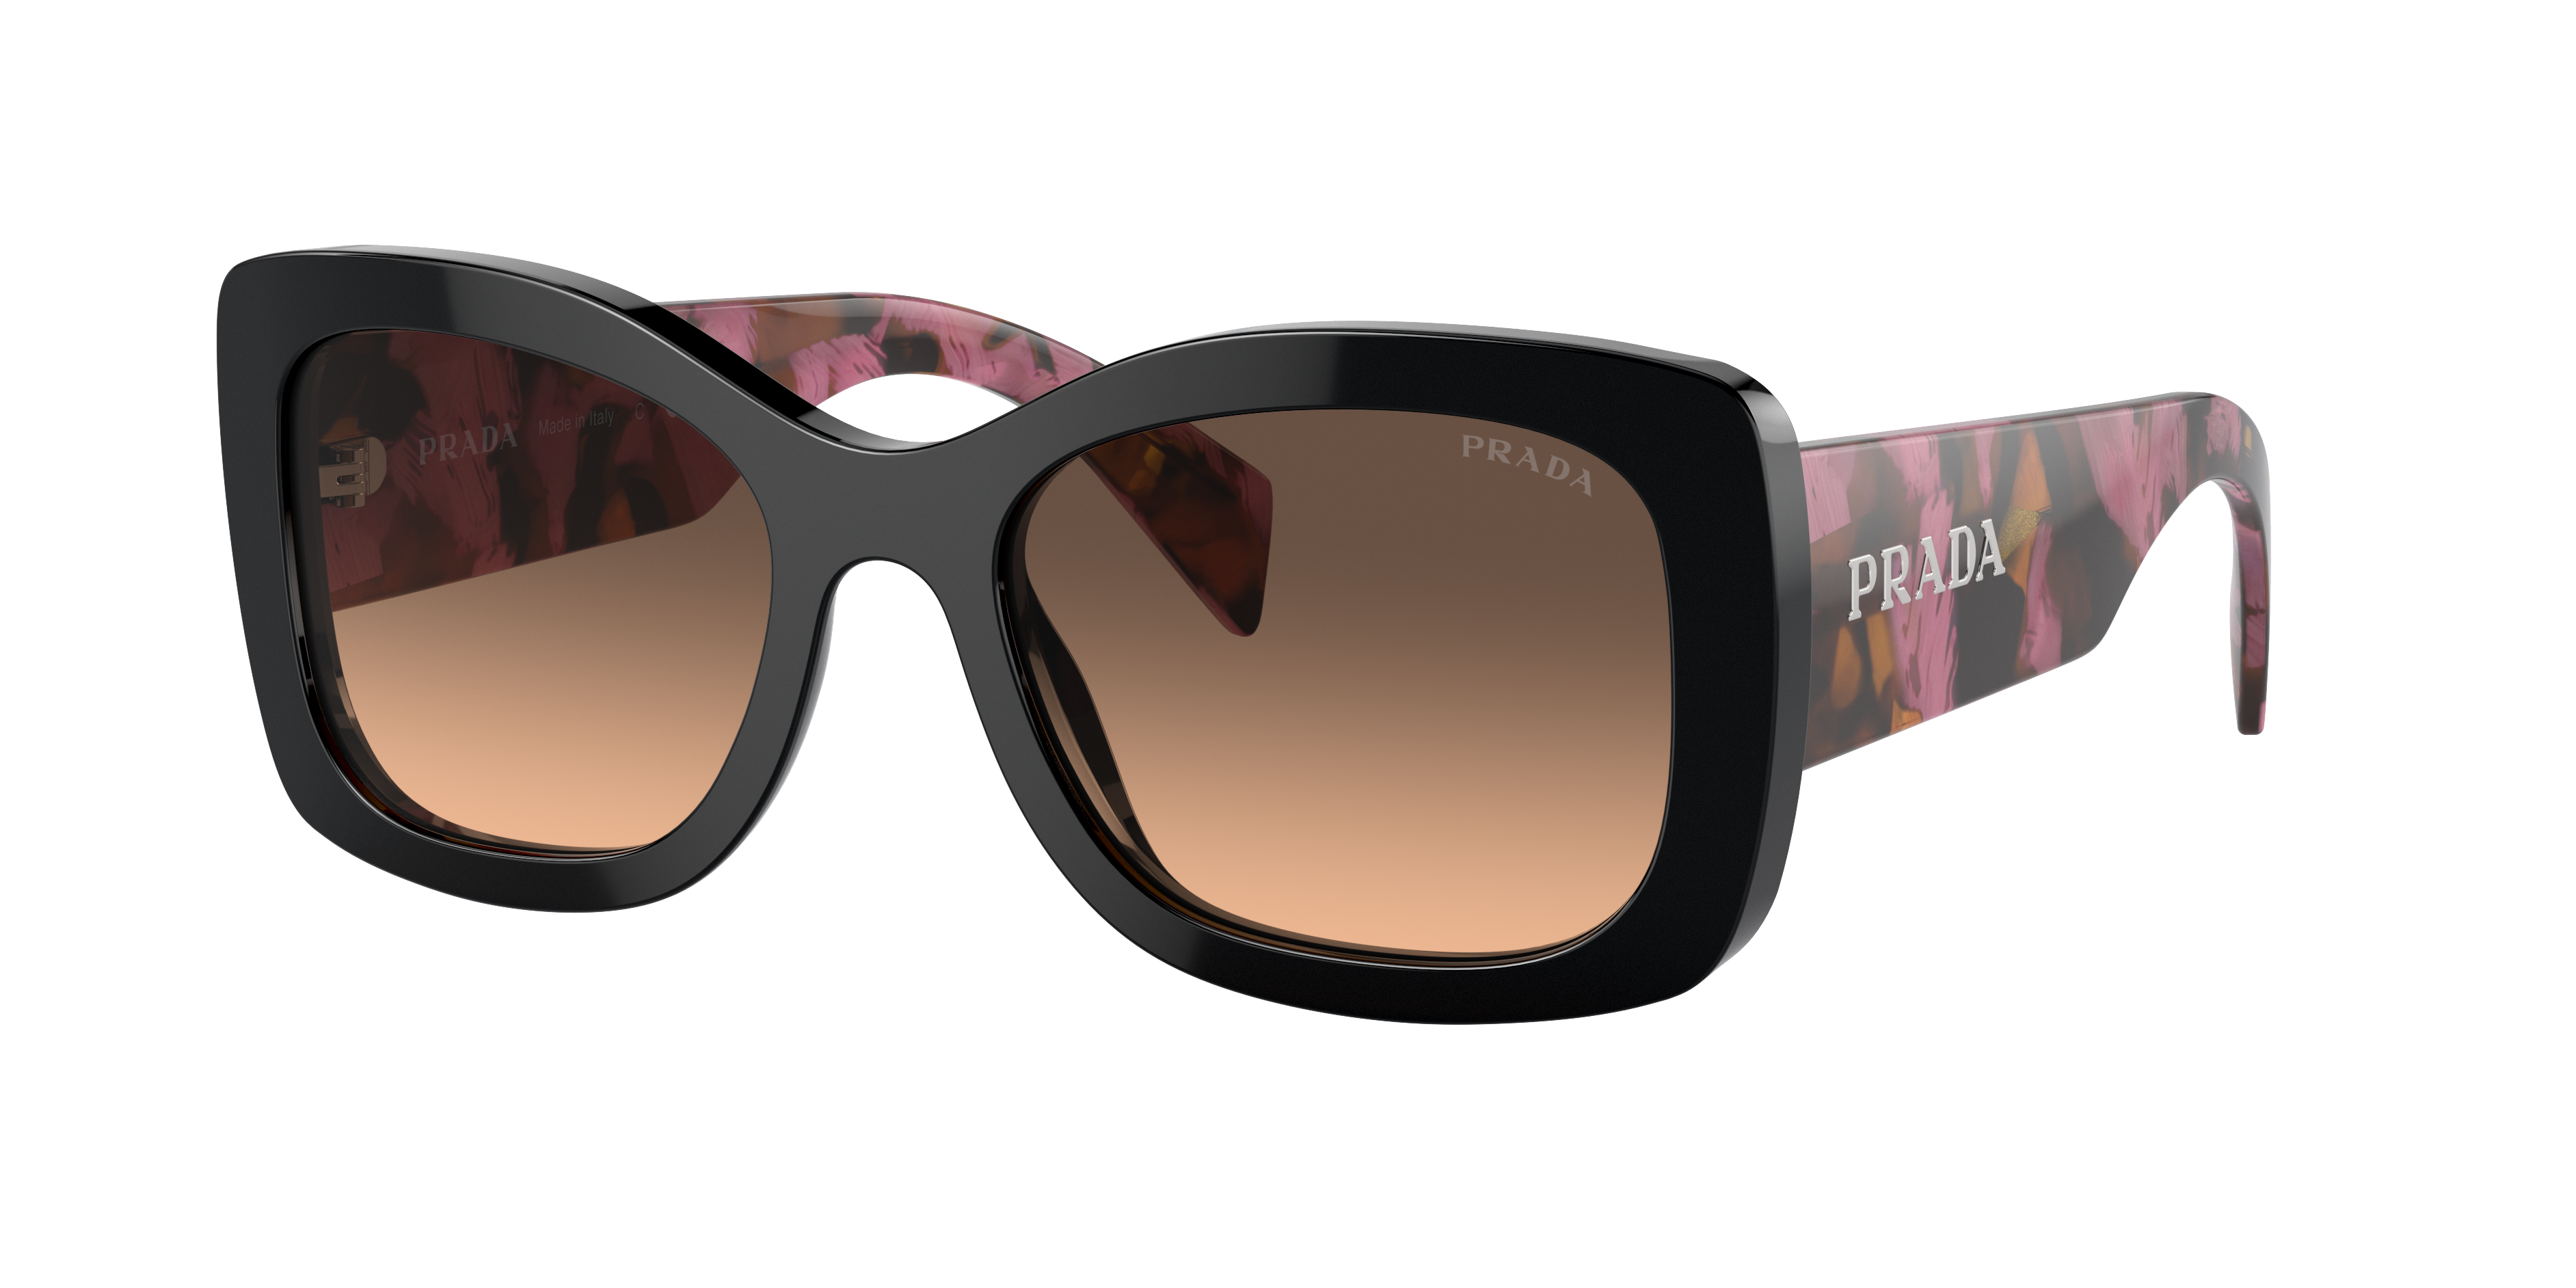 PRADA PR A08S Mahogany - Women Luxury Sunglasses, Brown Gradient Grey Lens